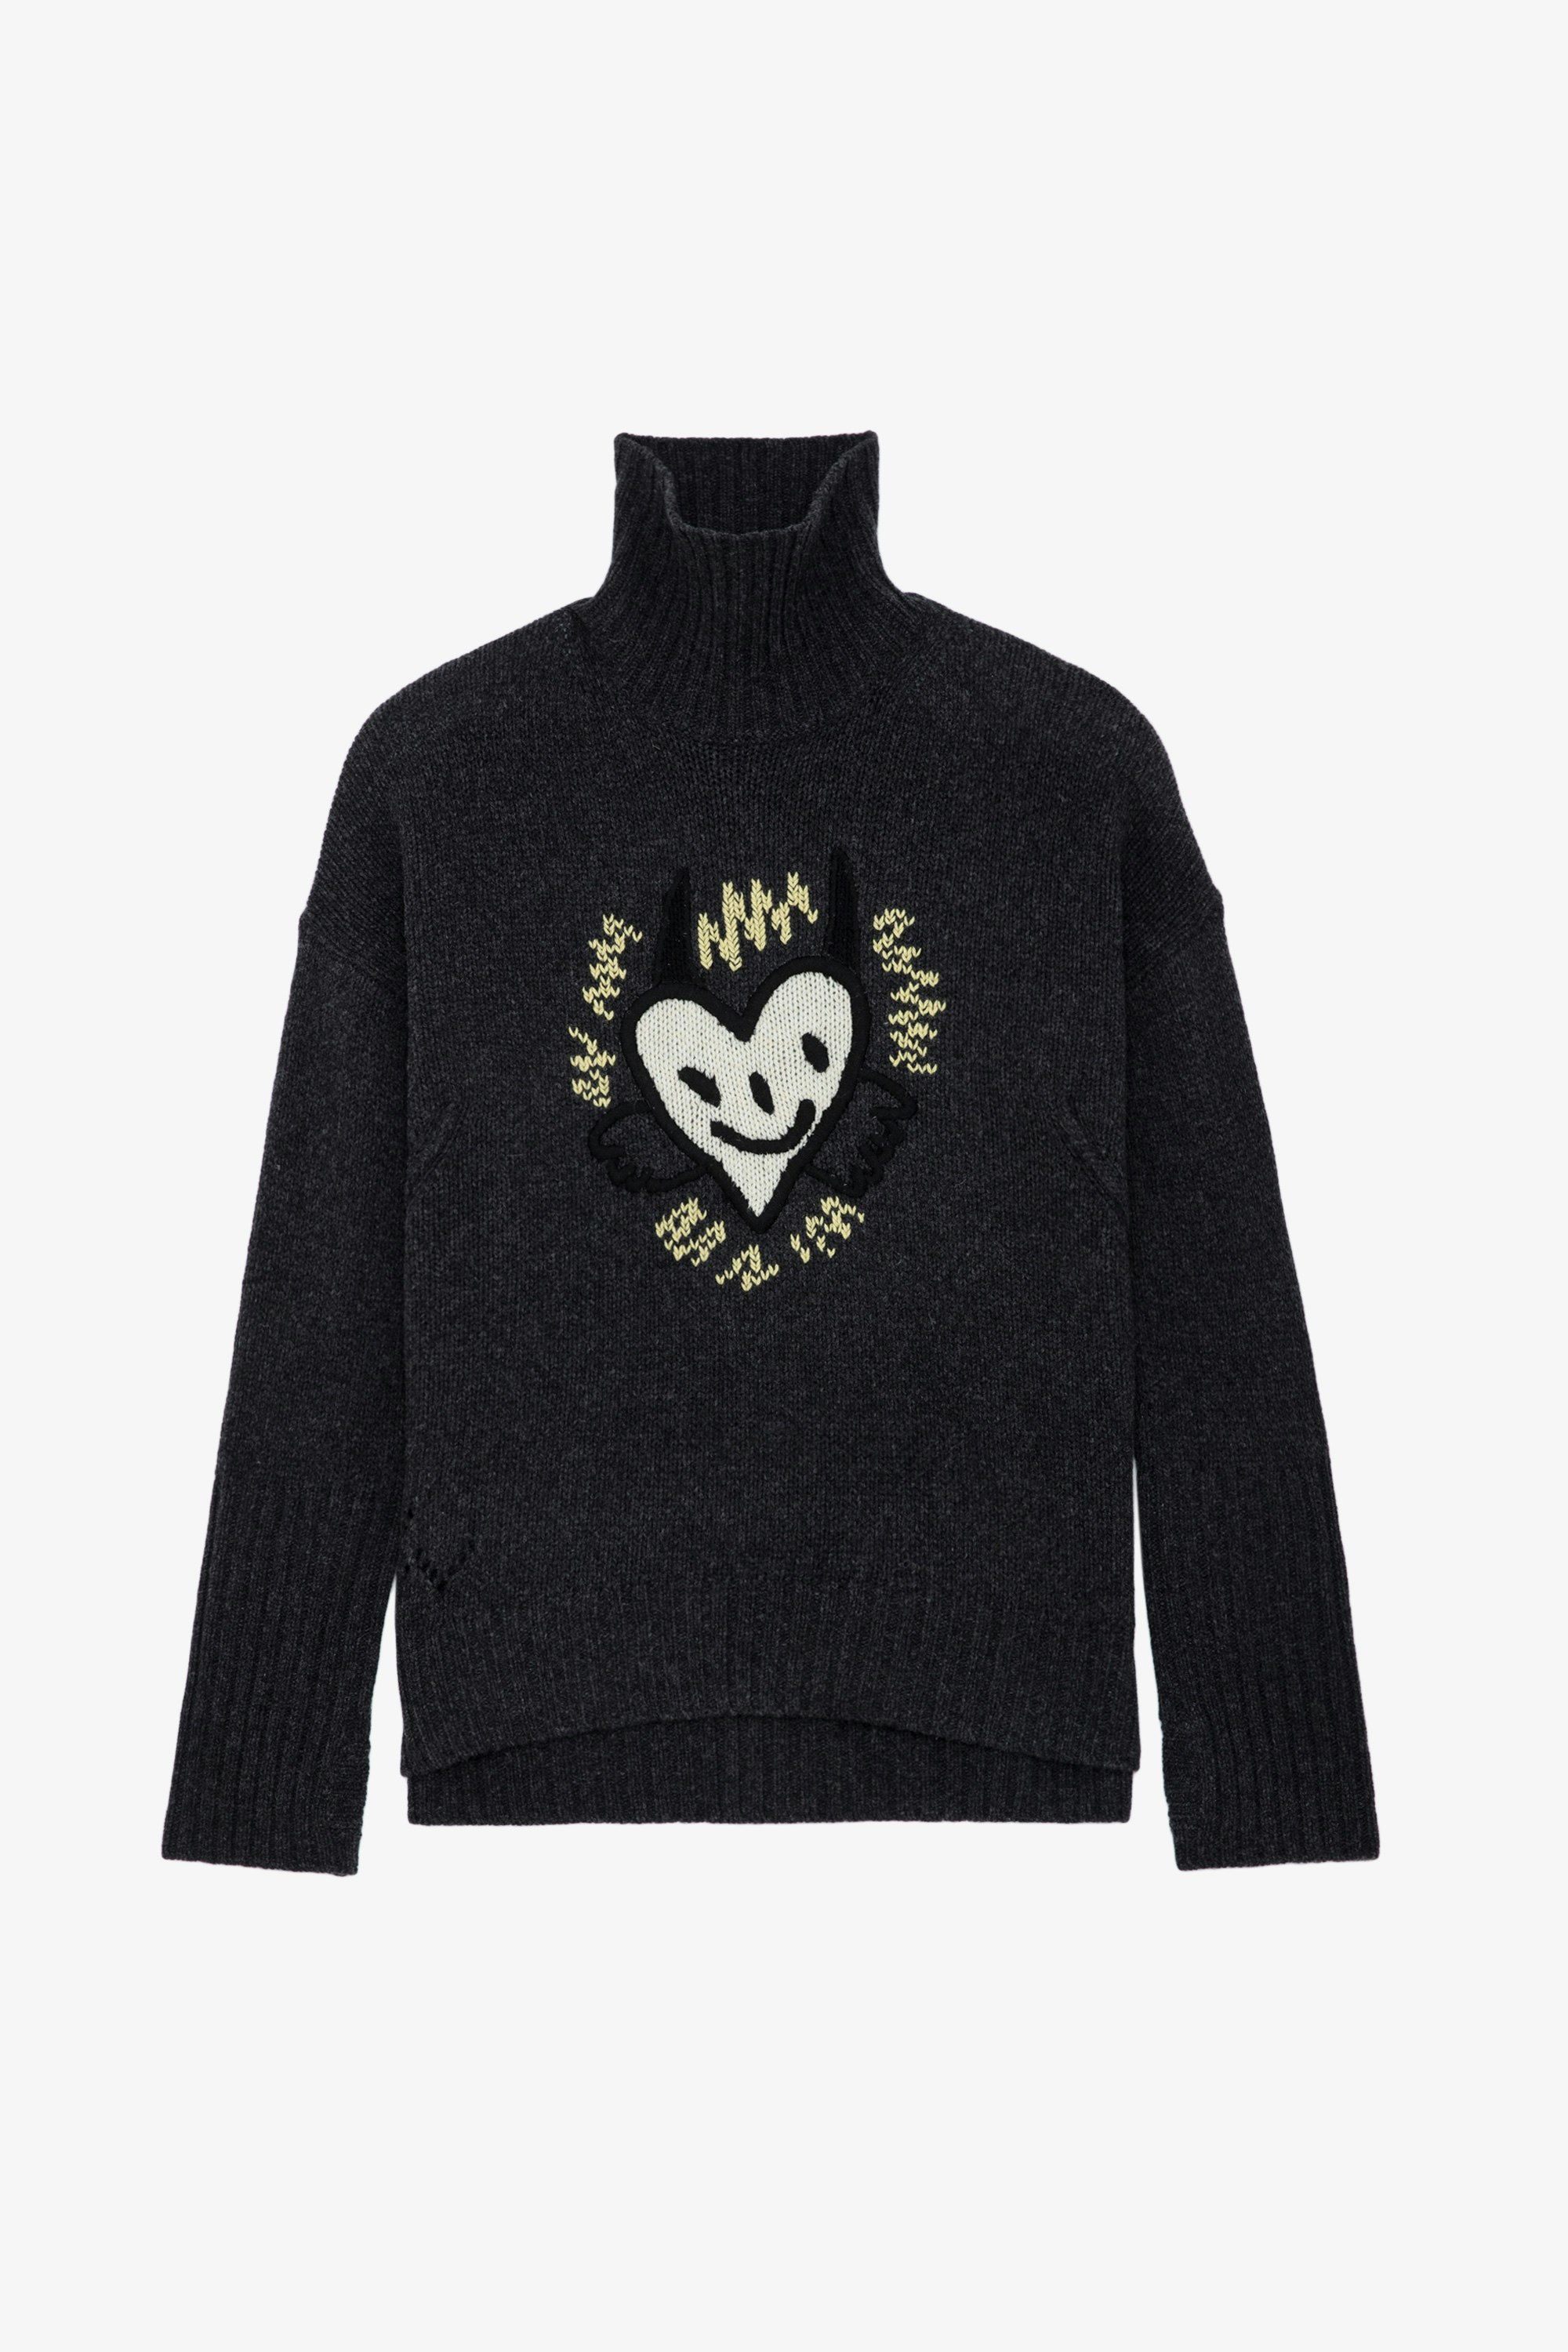 Alma We Heart Sweater - Women’s dark grey merino wool sweater with mock neckline and customized details designed by Humberto Cruz.